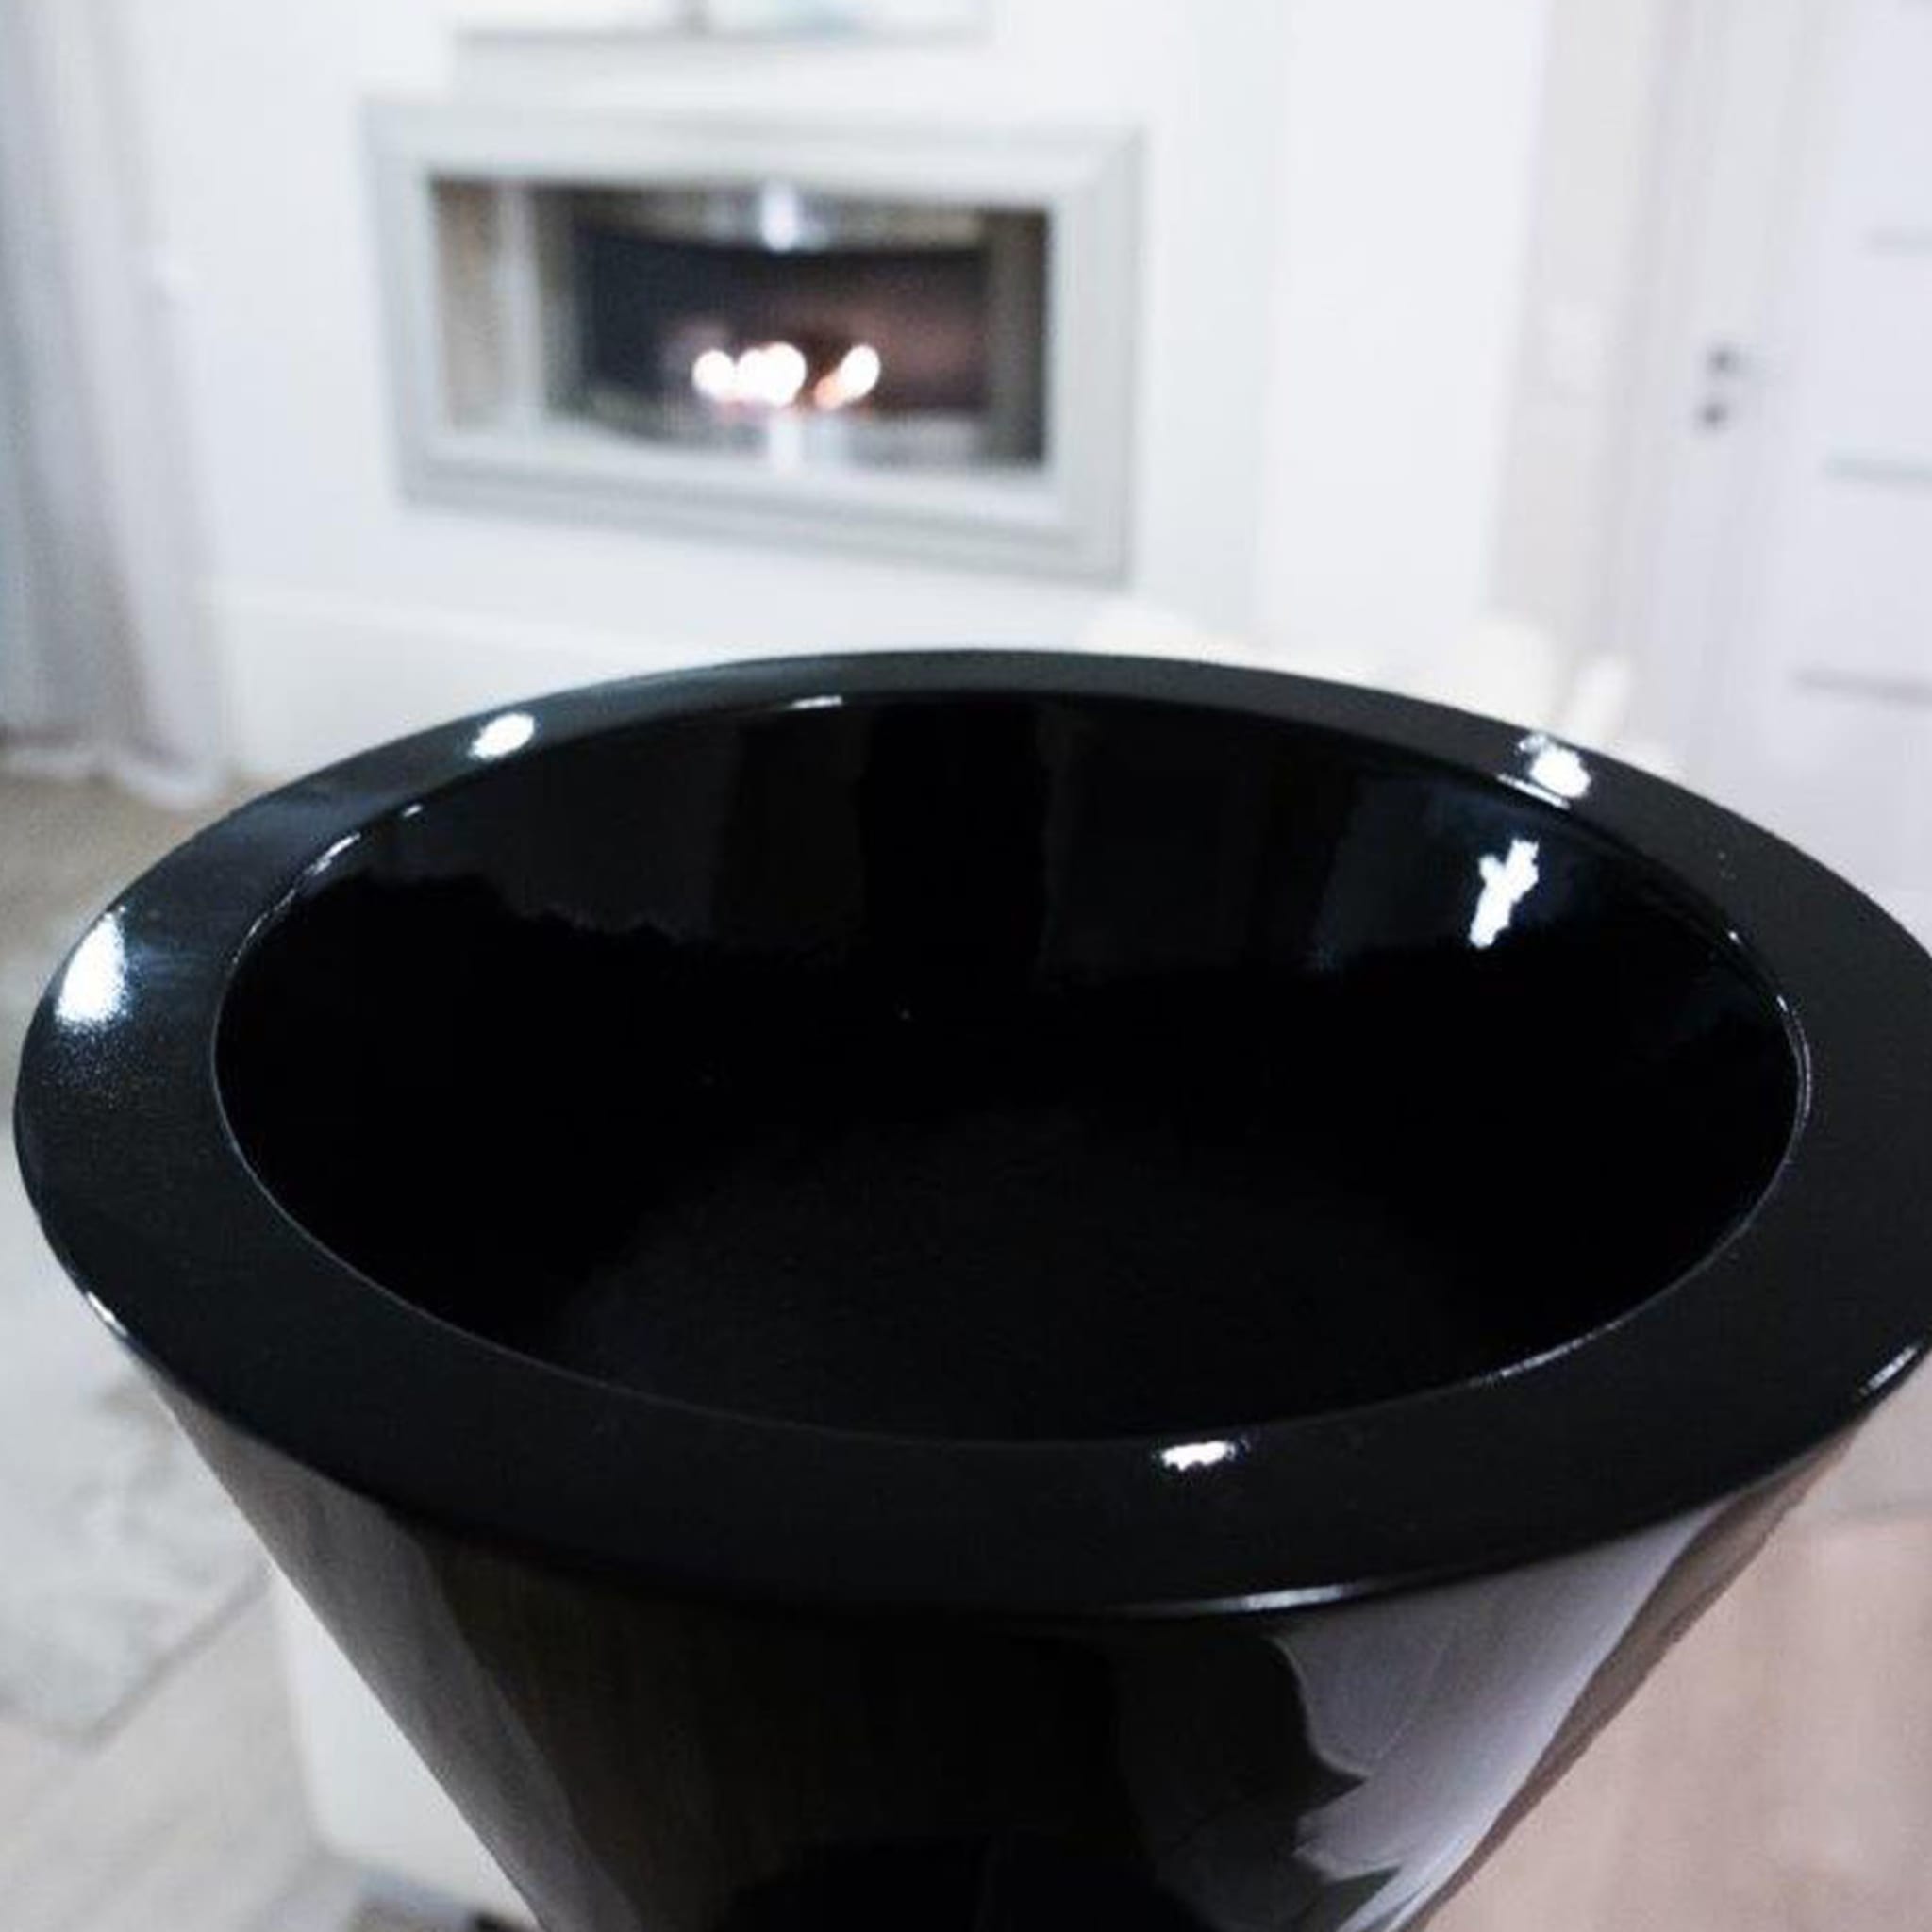 FoRMA Poliedro Black Vase by Simone Micheli - Alternative view 1